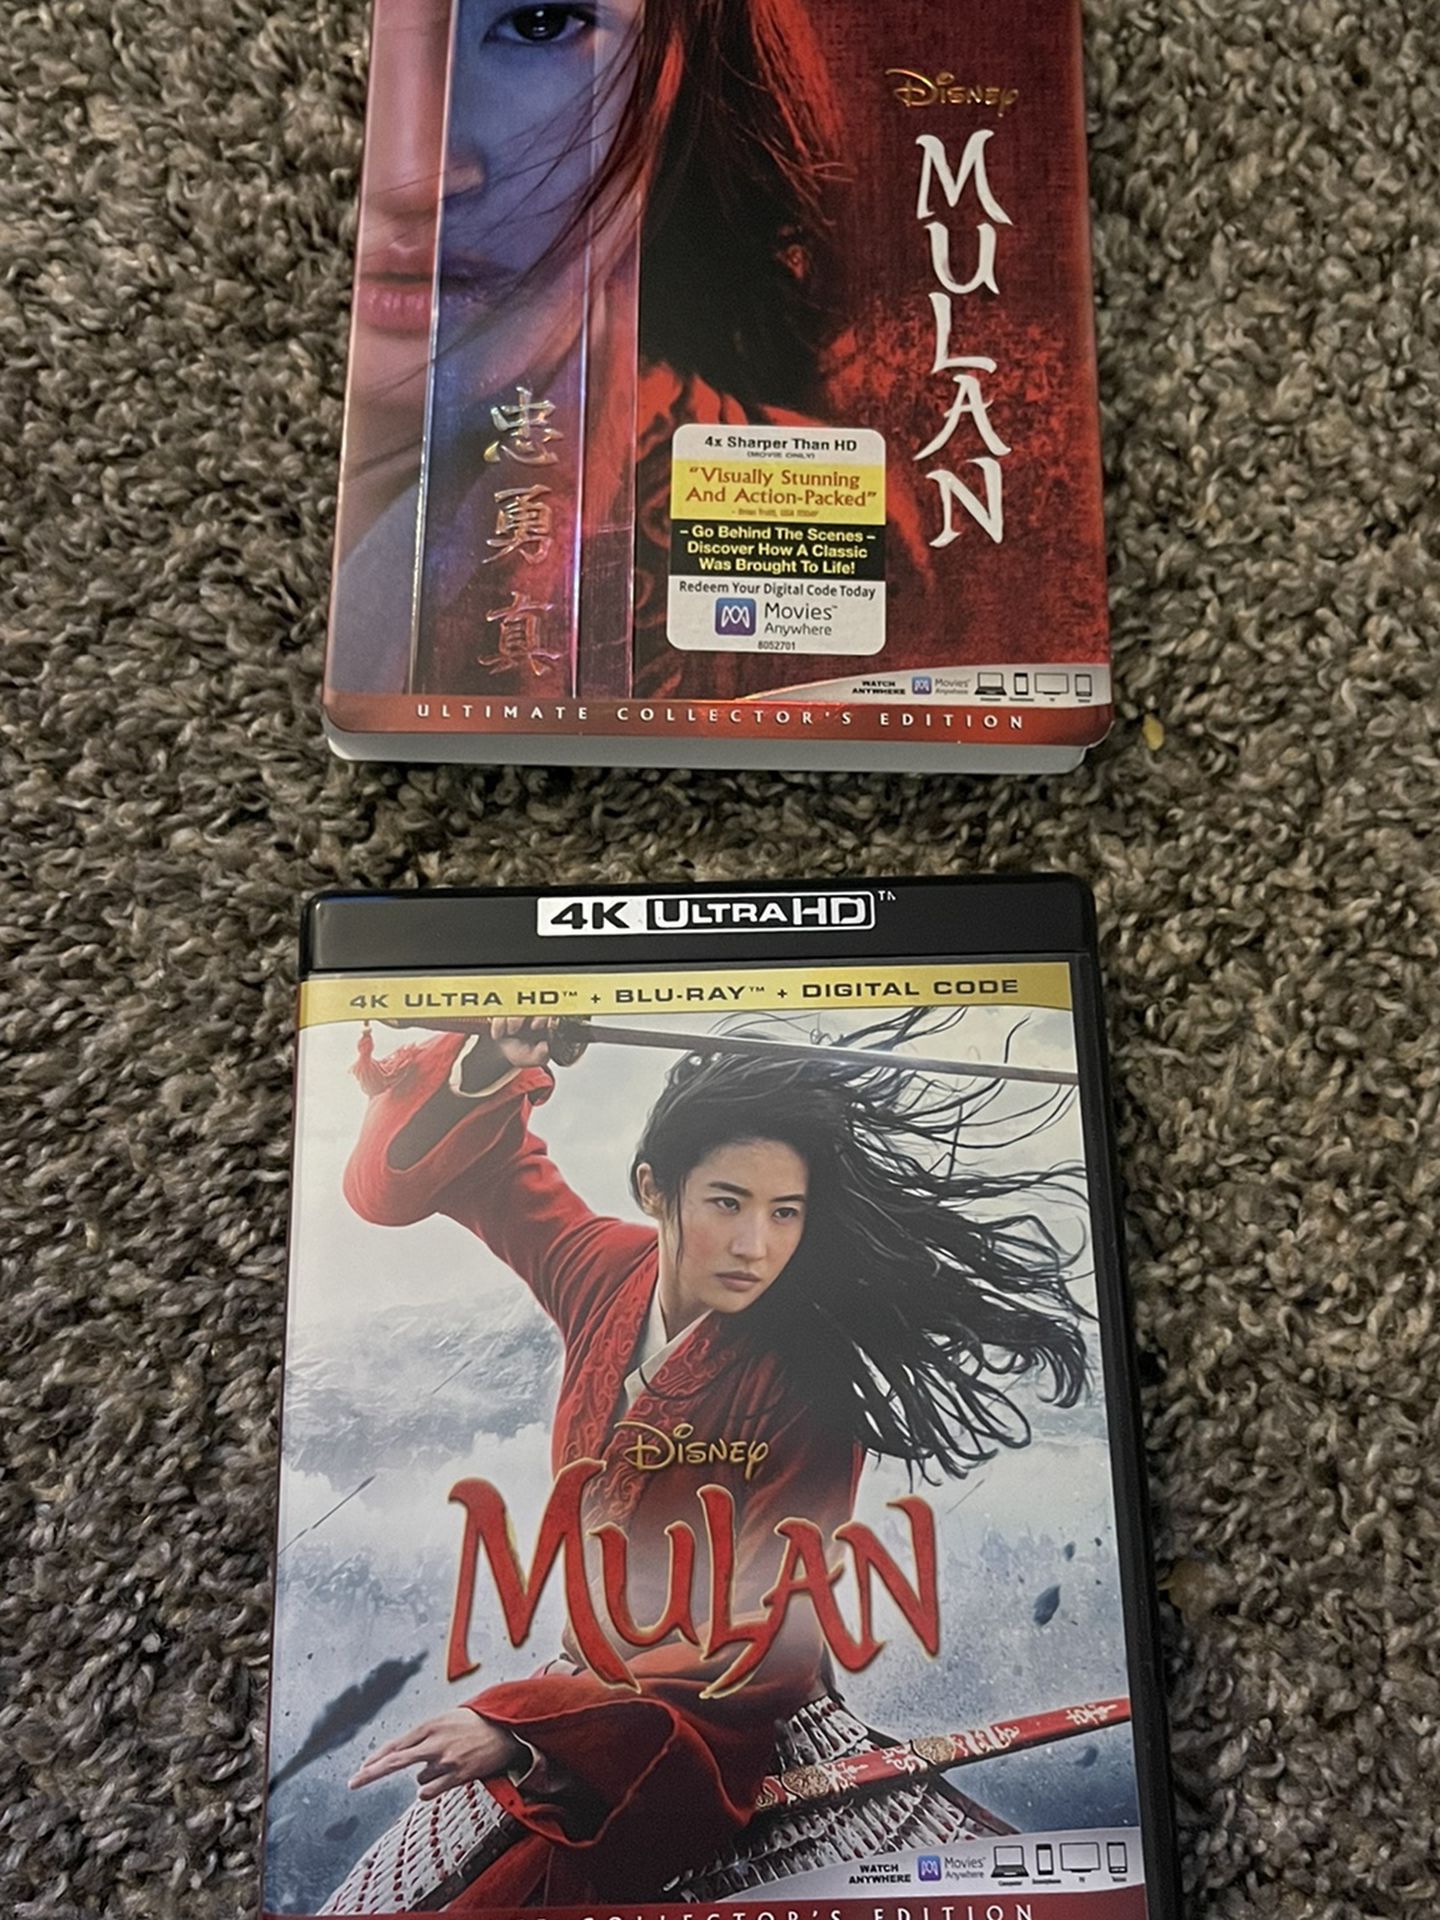 Disney Mulan Live Action 4K + Blu-ray (no digital code)